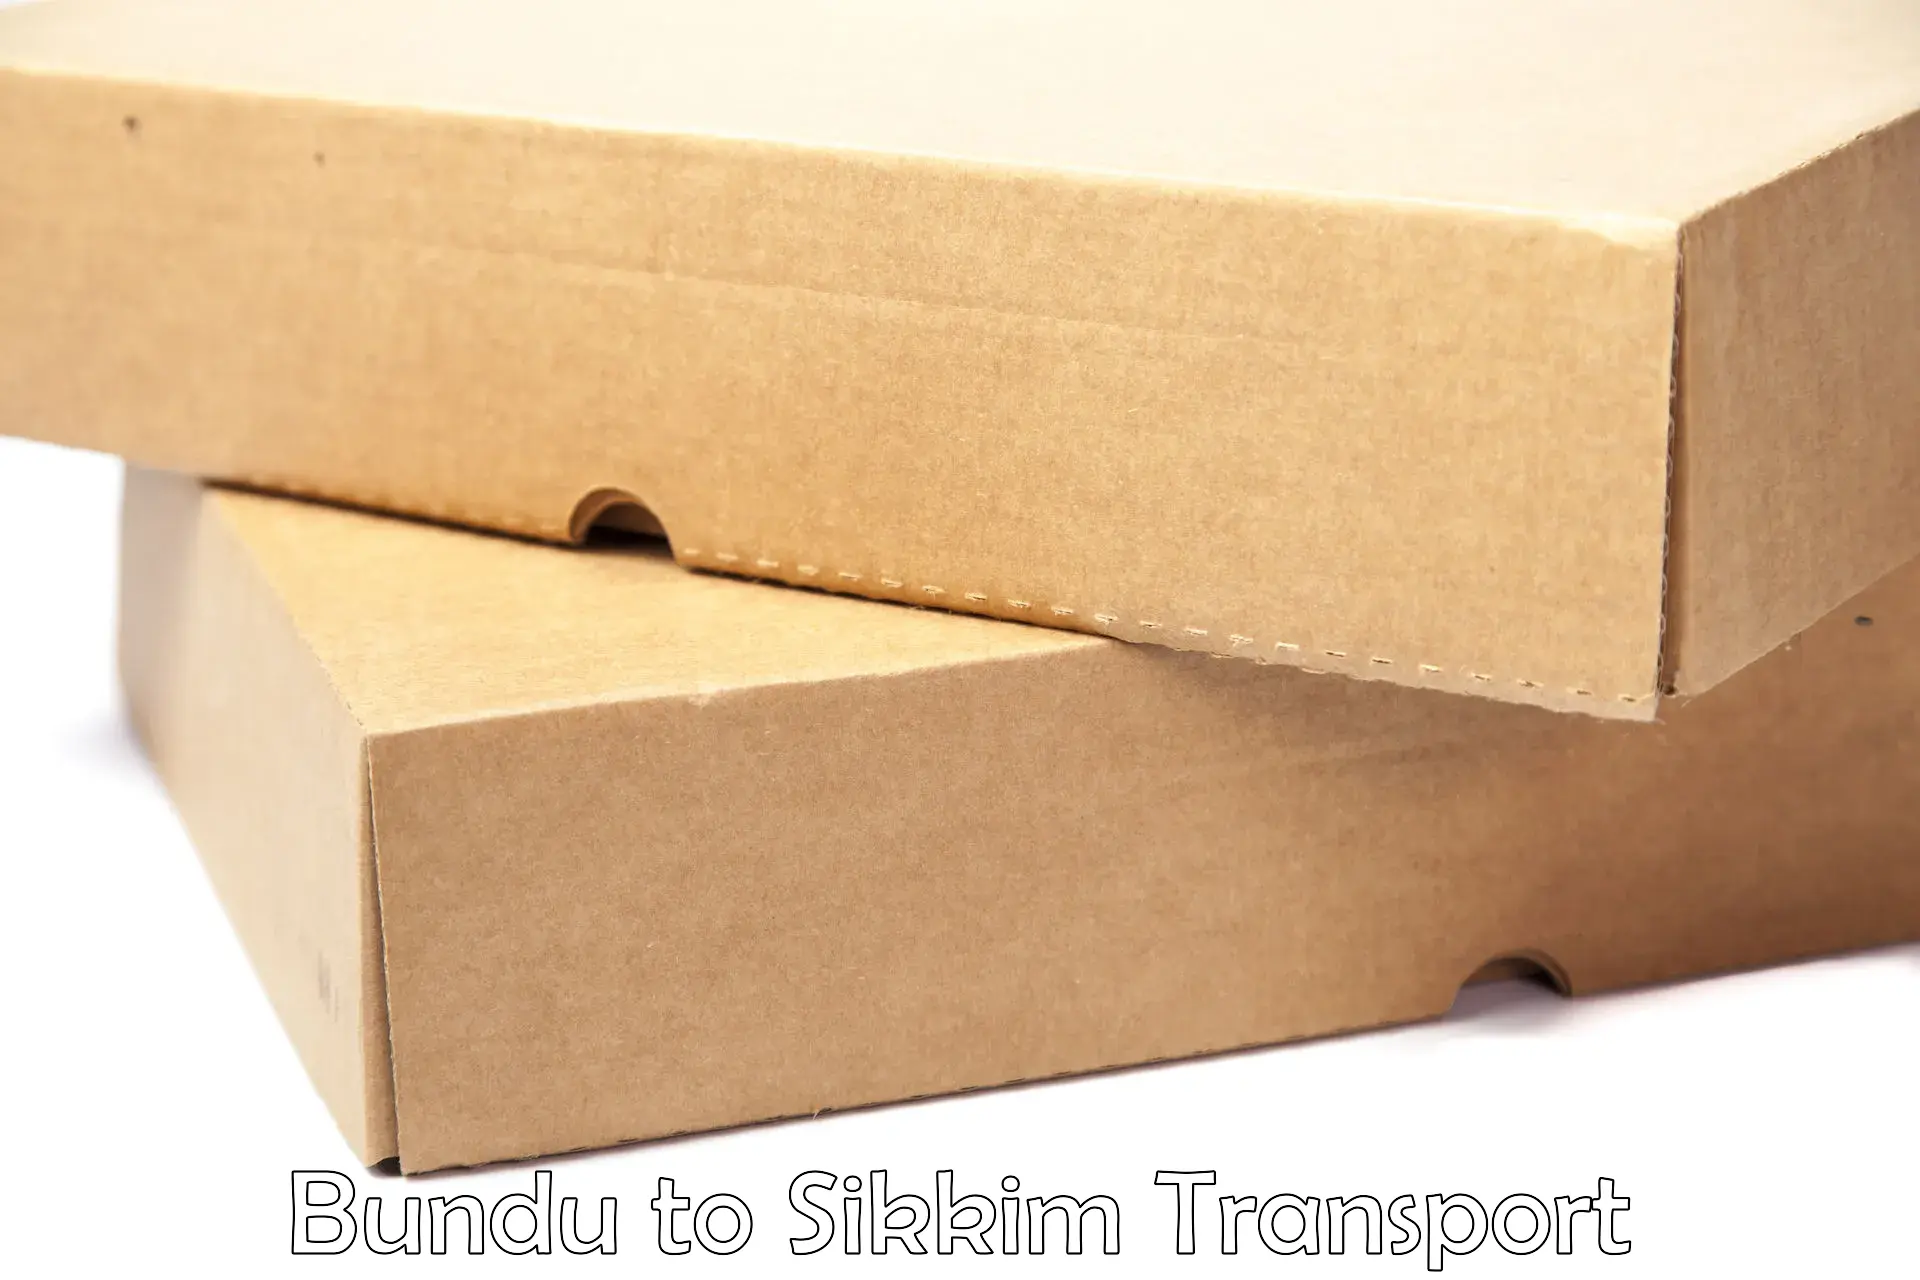 Furniture transport service Bundu to Mangan